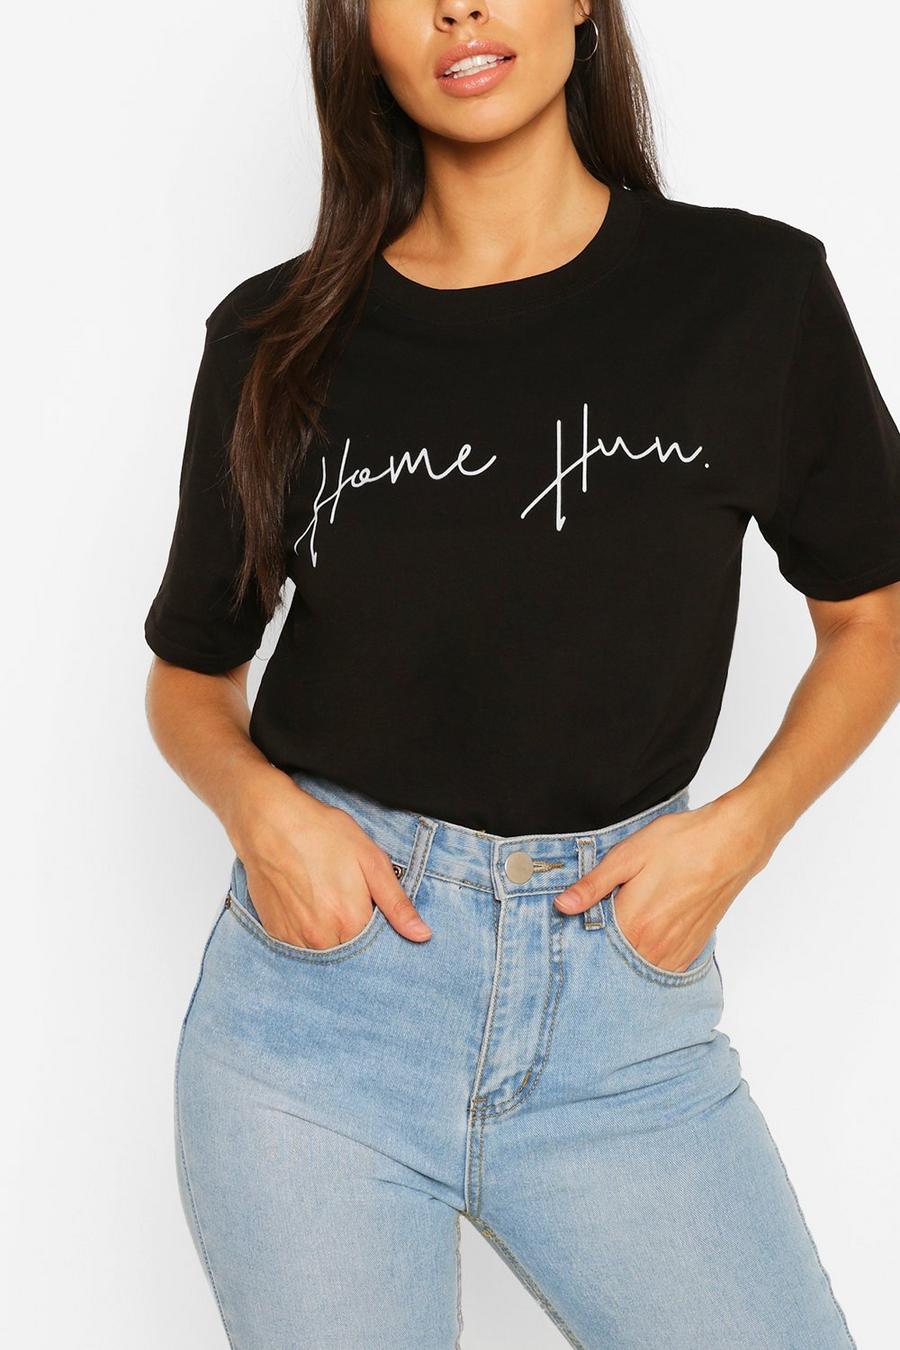 Camiseta con eslogan "Home Hun" image number 1